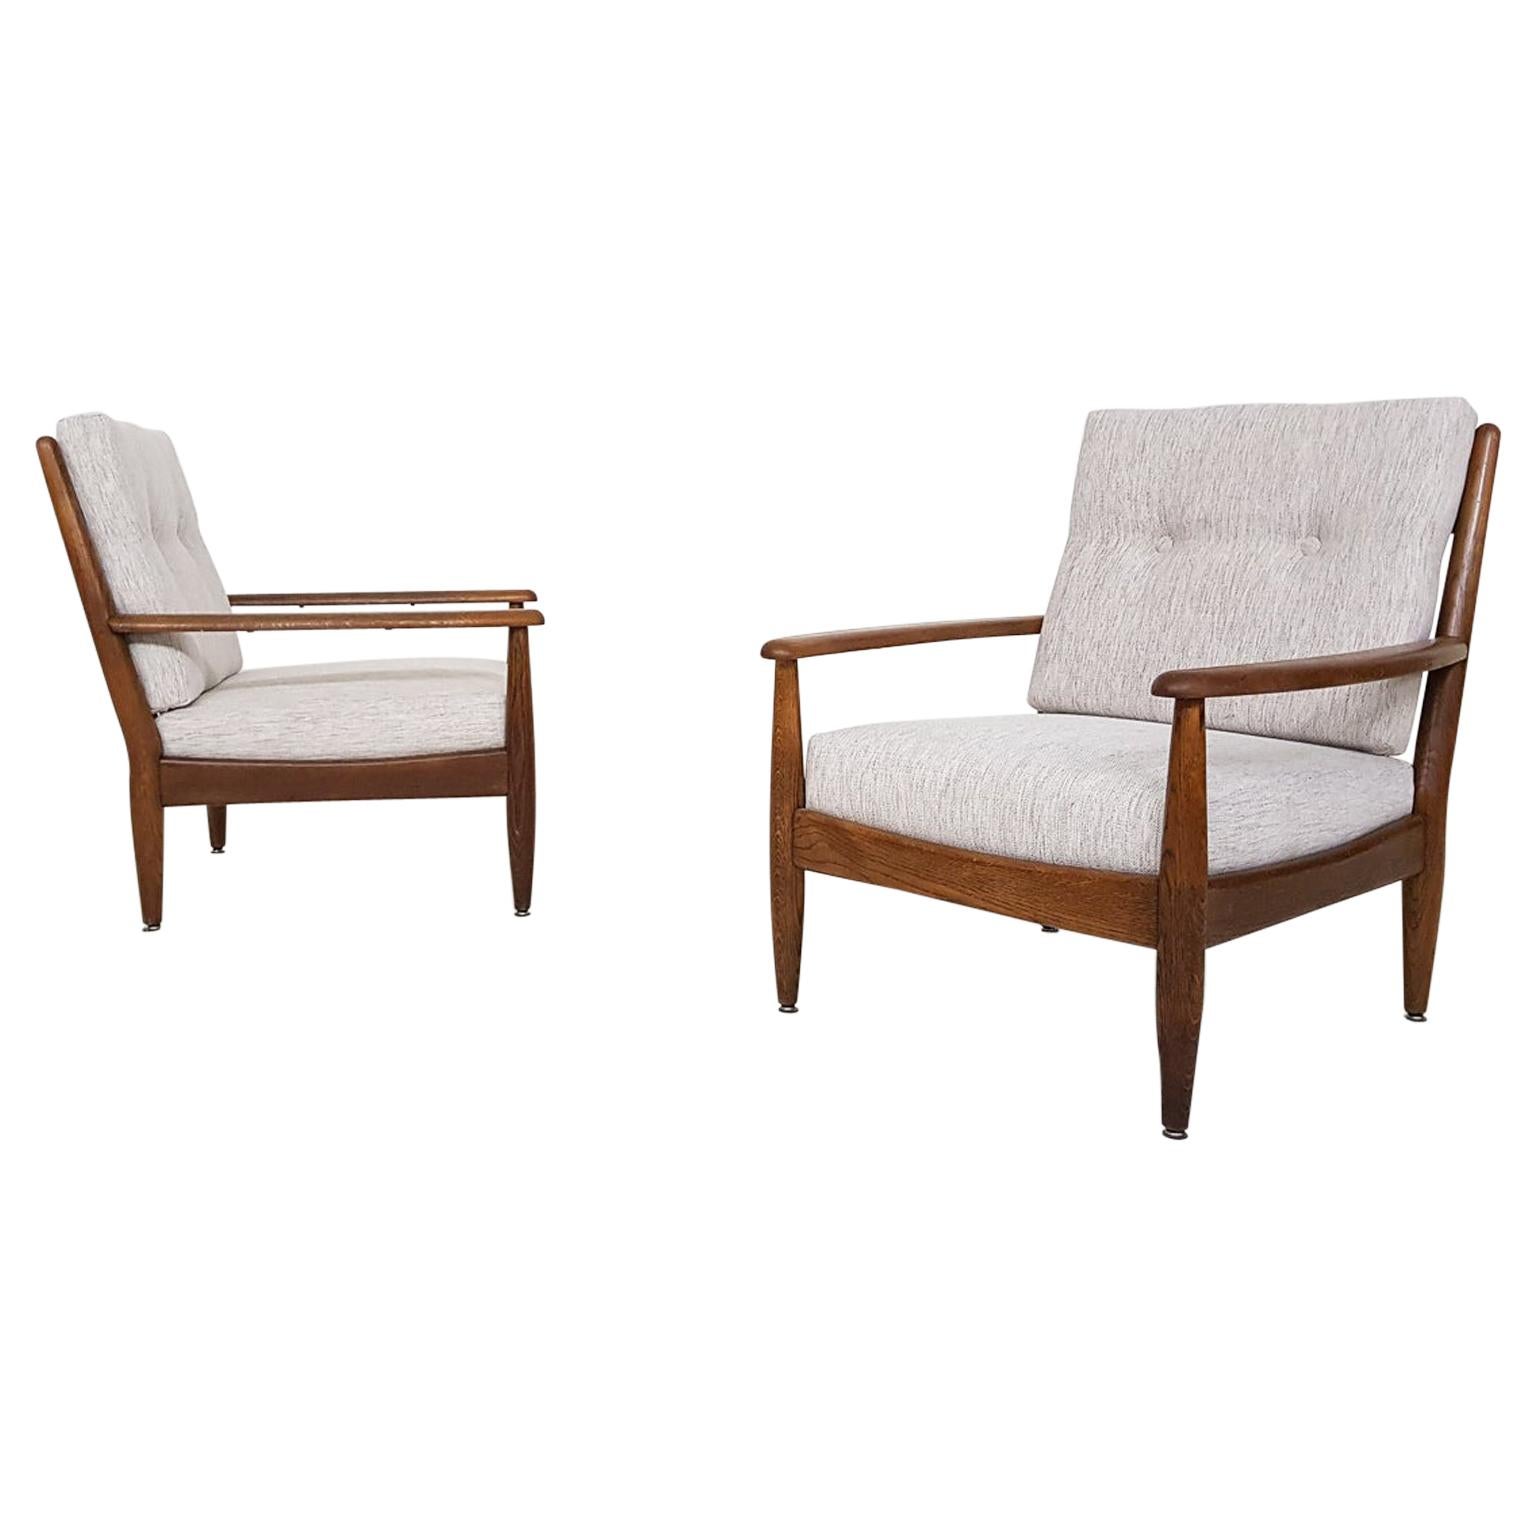 Ib Kofod-Larsen & Bovenkamp Attributed Lounge Chairs in Oak, Dutch Design, 1960s